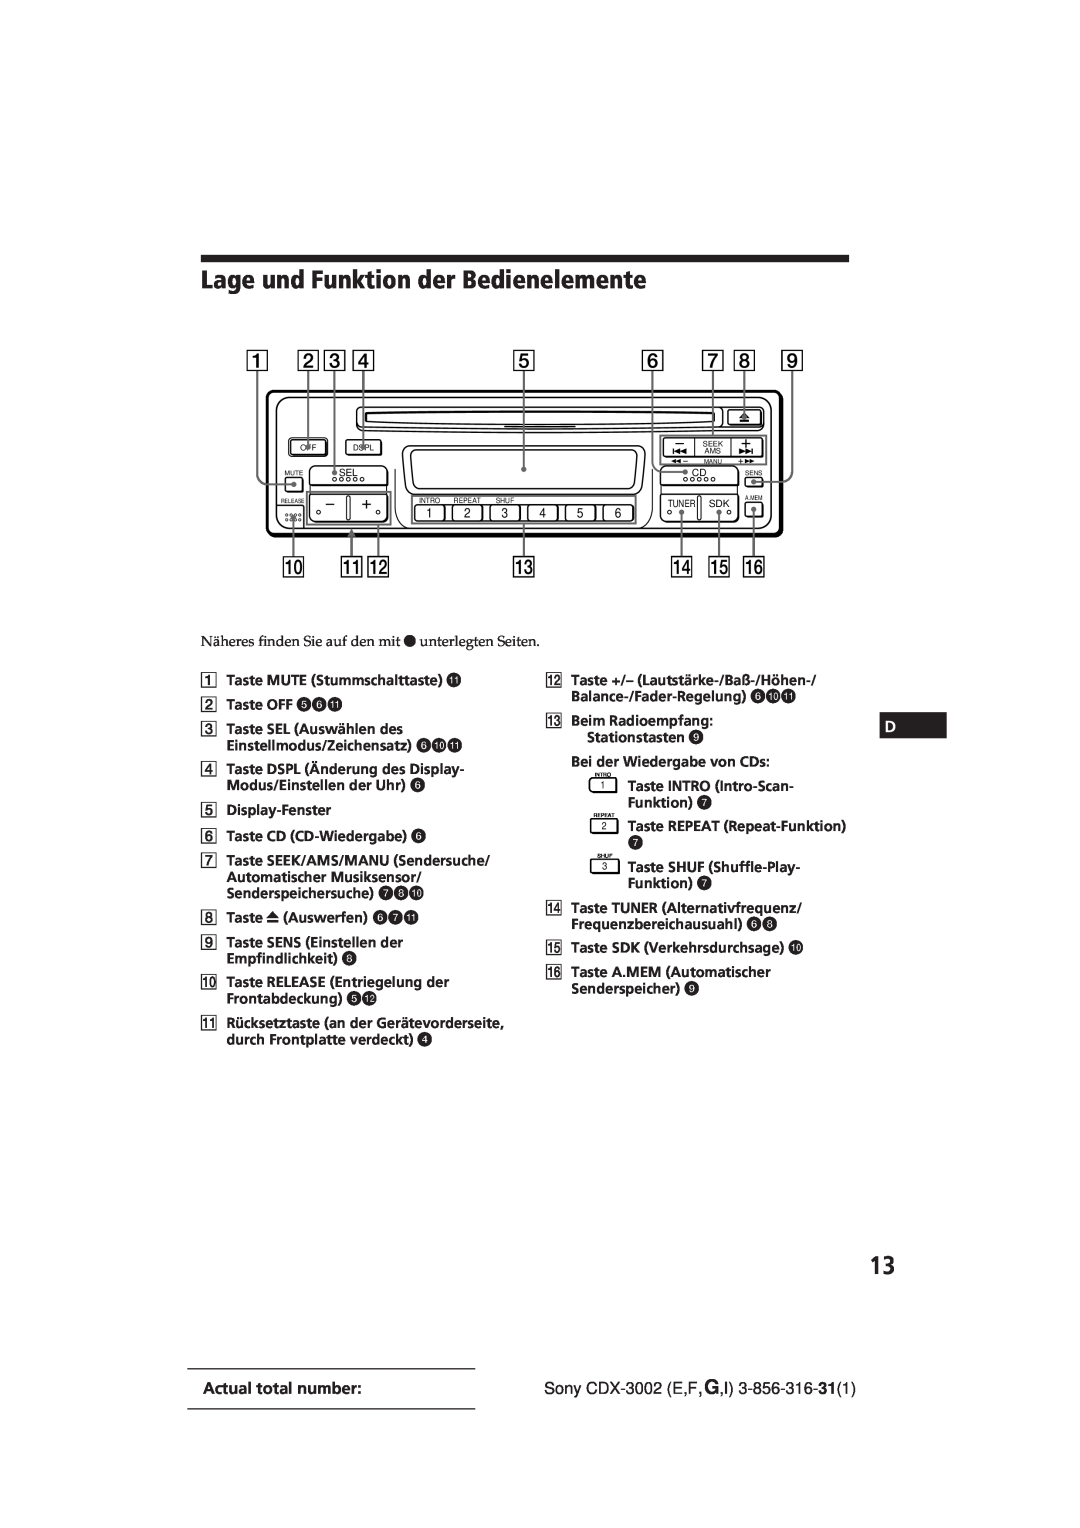 Sony CDX-3002 manual Lage und Funktion der Bedienelemente, Actual total number 